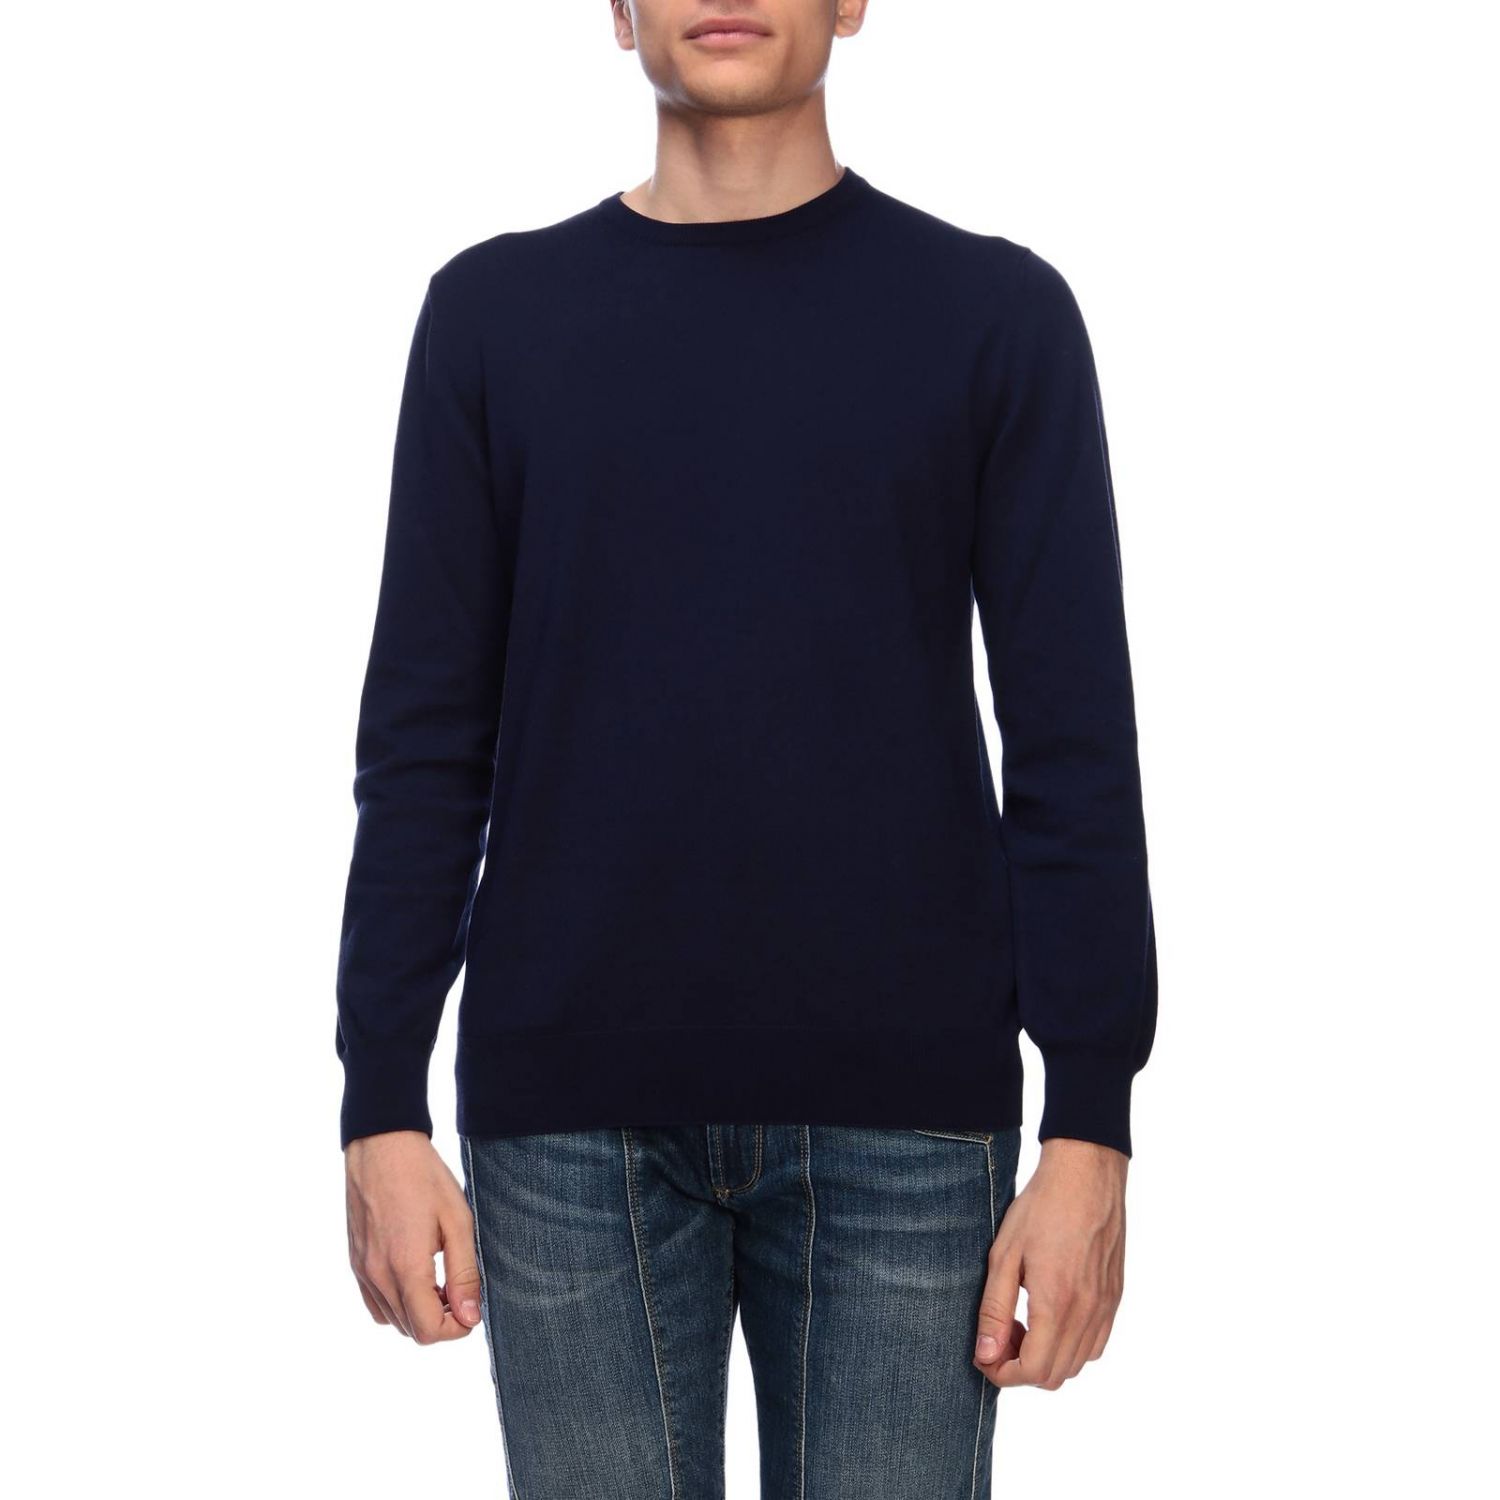 Cruciani Outlet: sweater for man - Blue | Cruciani sweater CU559.G03 ...